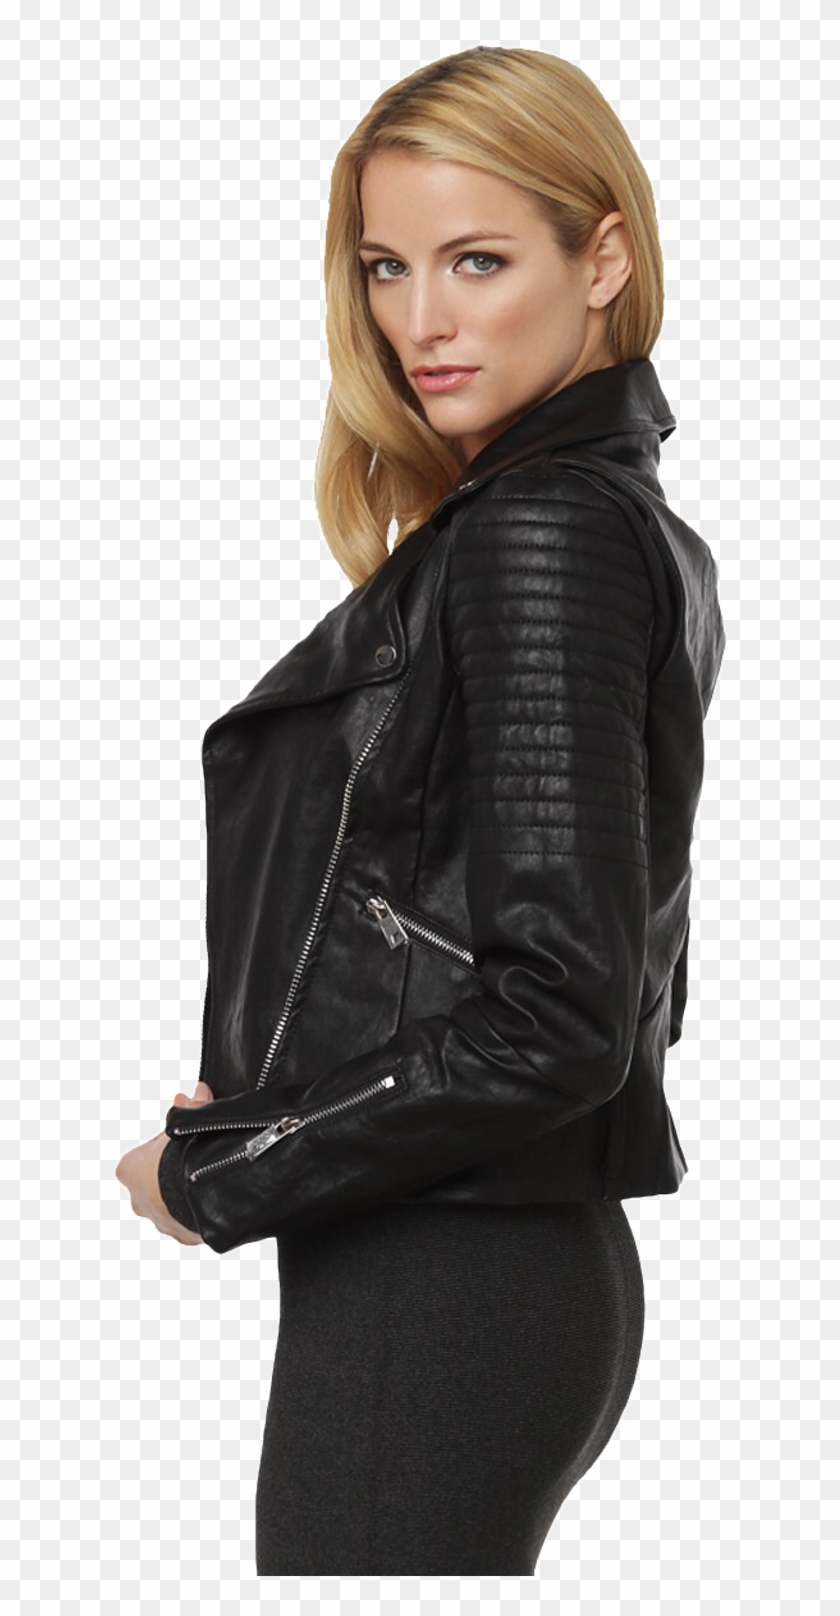 Blonde Girl In Black Leather Jacket - Bad Girl Leather Jacket Clipart #1800953